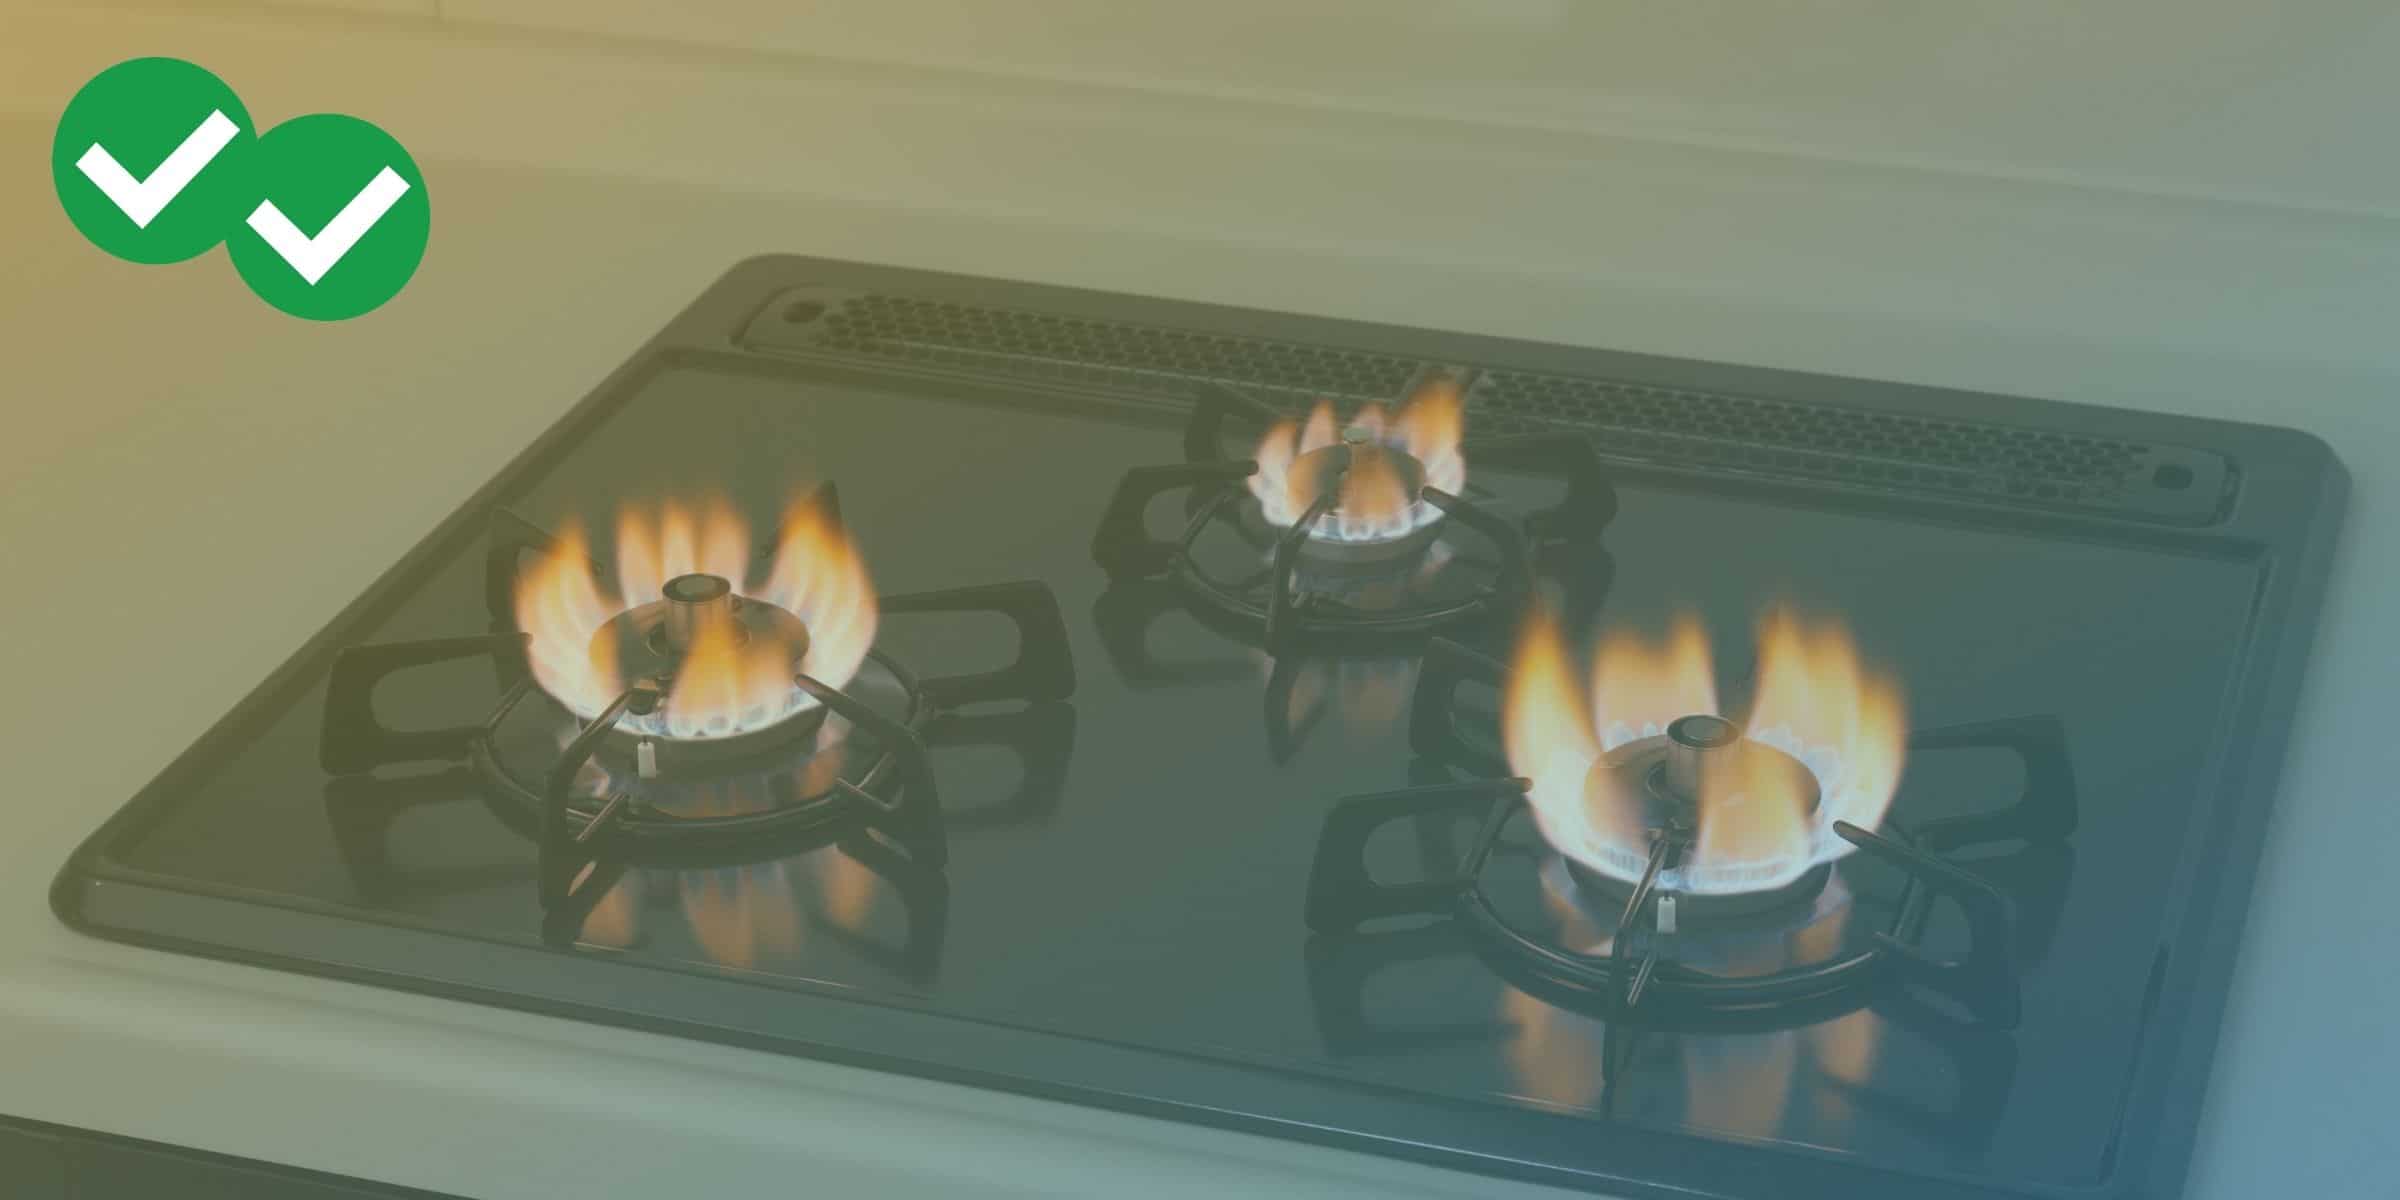 Gas burning on stove